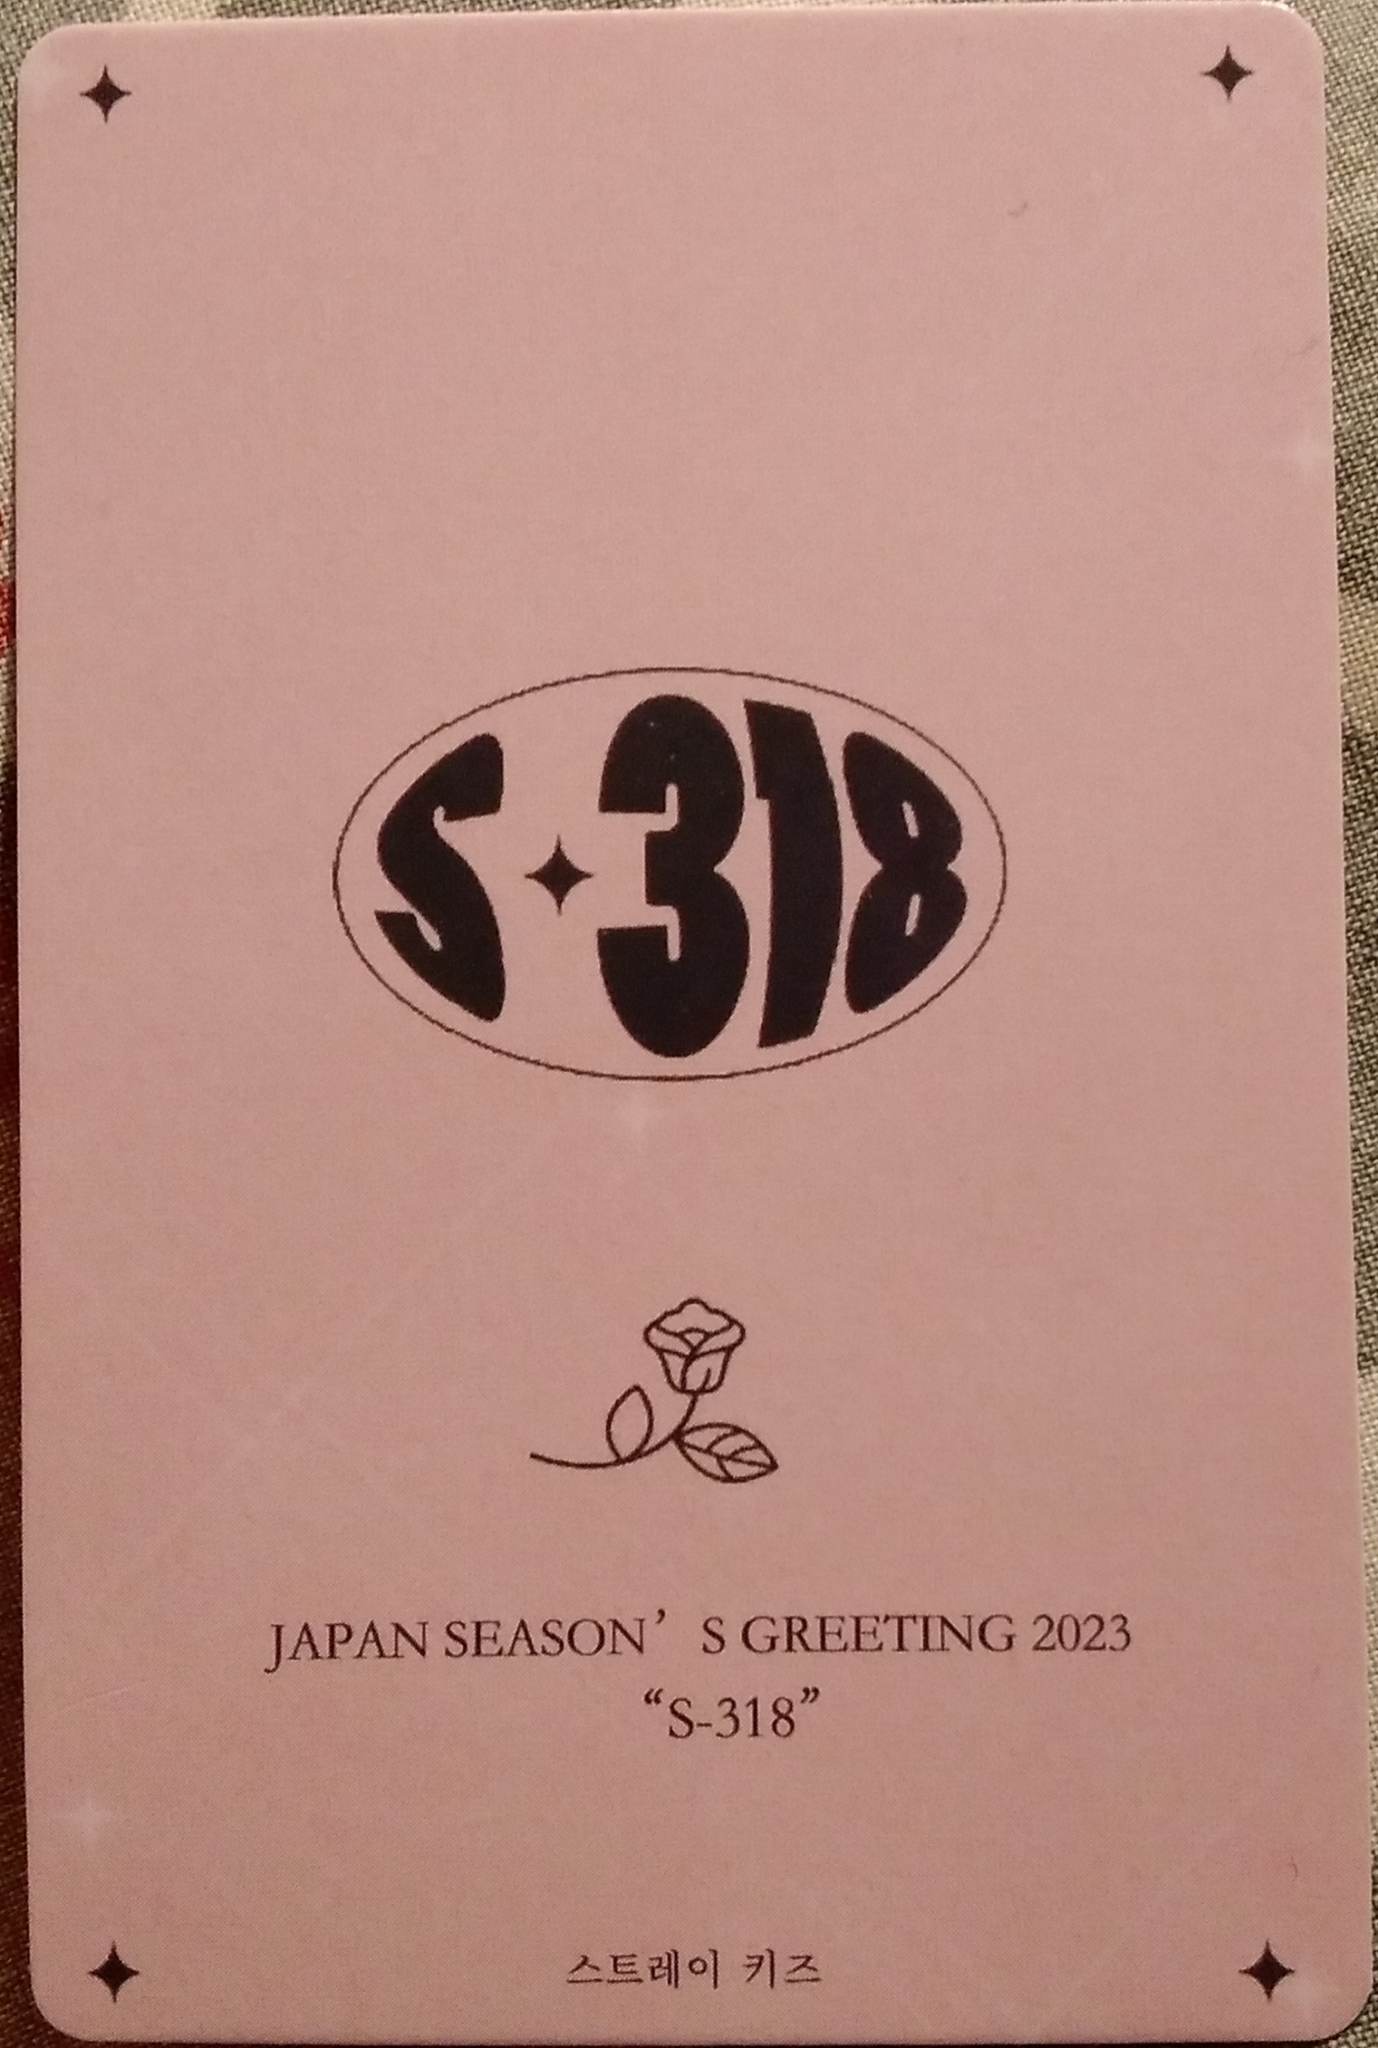 Photocard  STRAYKIDS  Japan season s greetings 2023  "S-318"  Hyunjin  Lee felix  Lee know